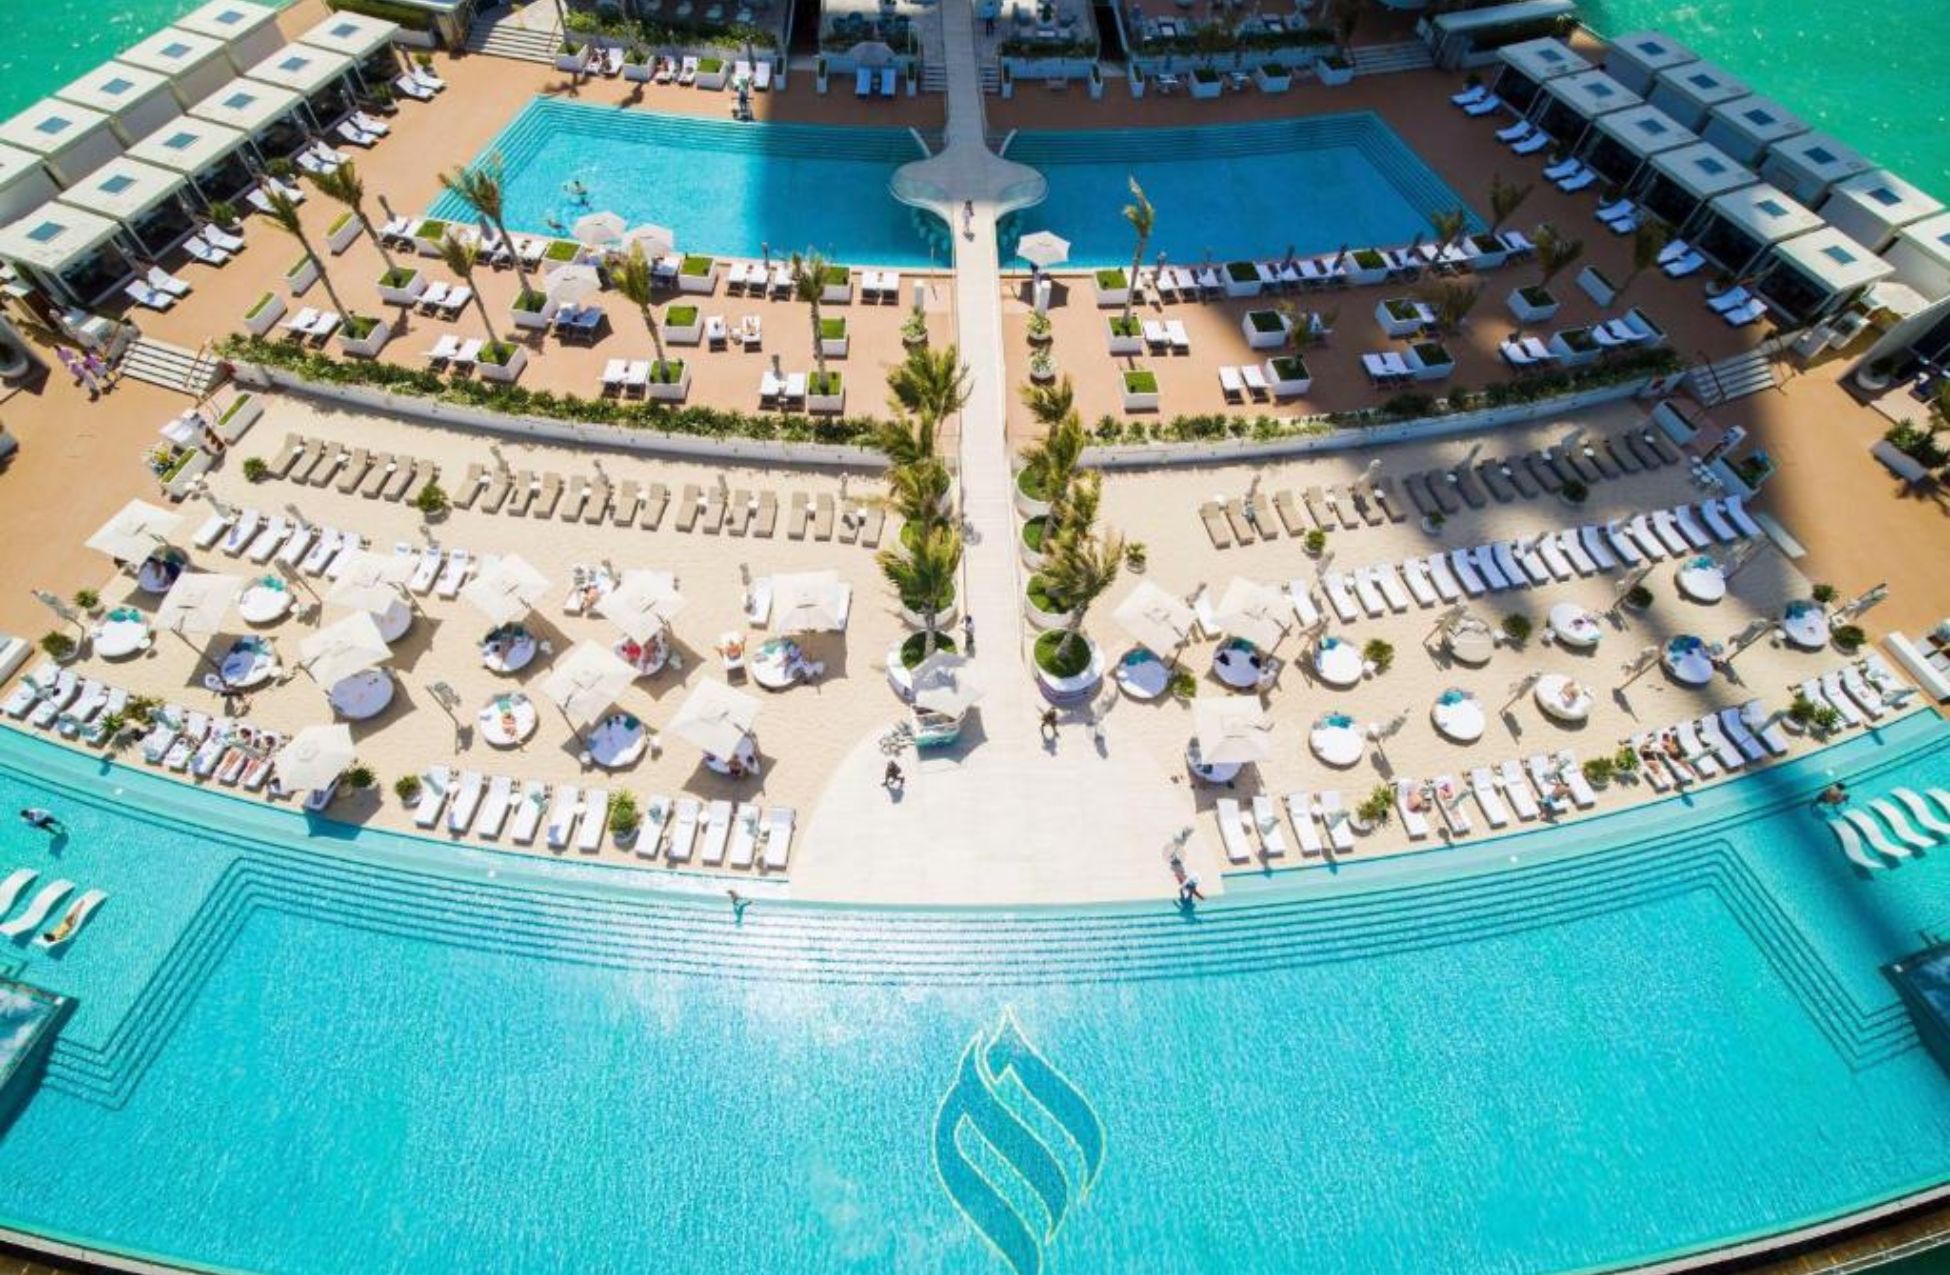 Burj Al Arab Jumeirah - Best Hotels In Dubai